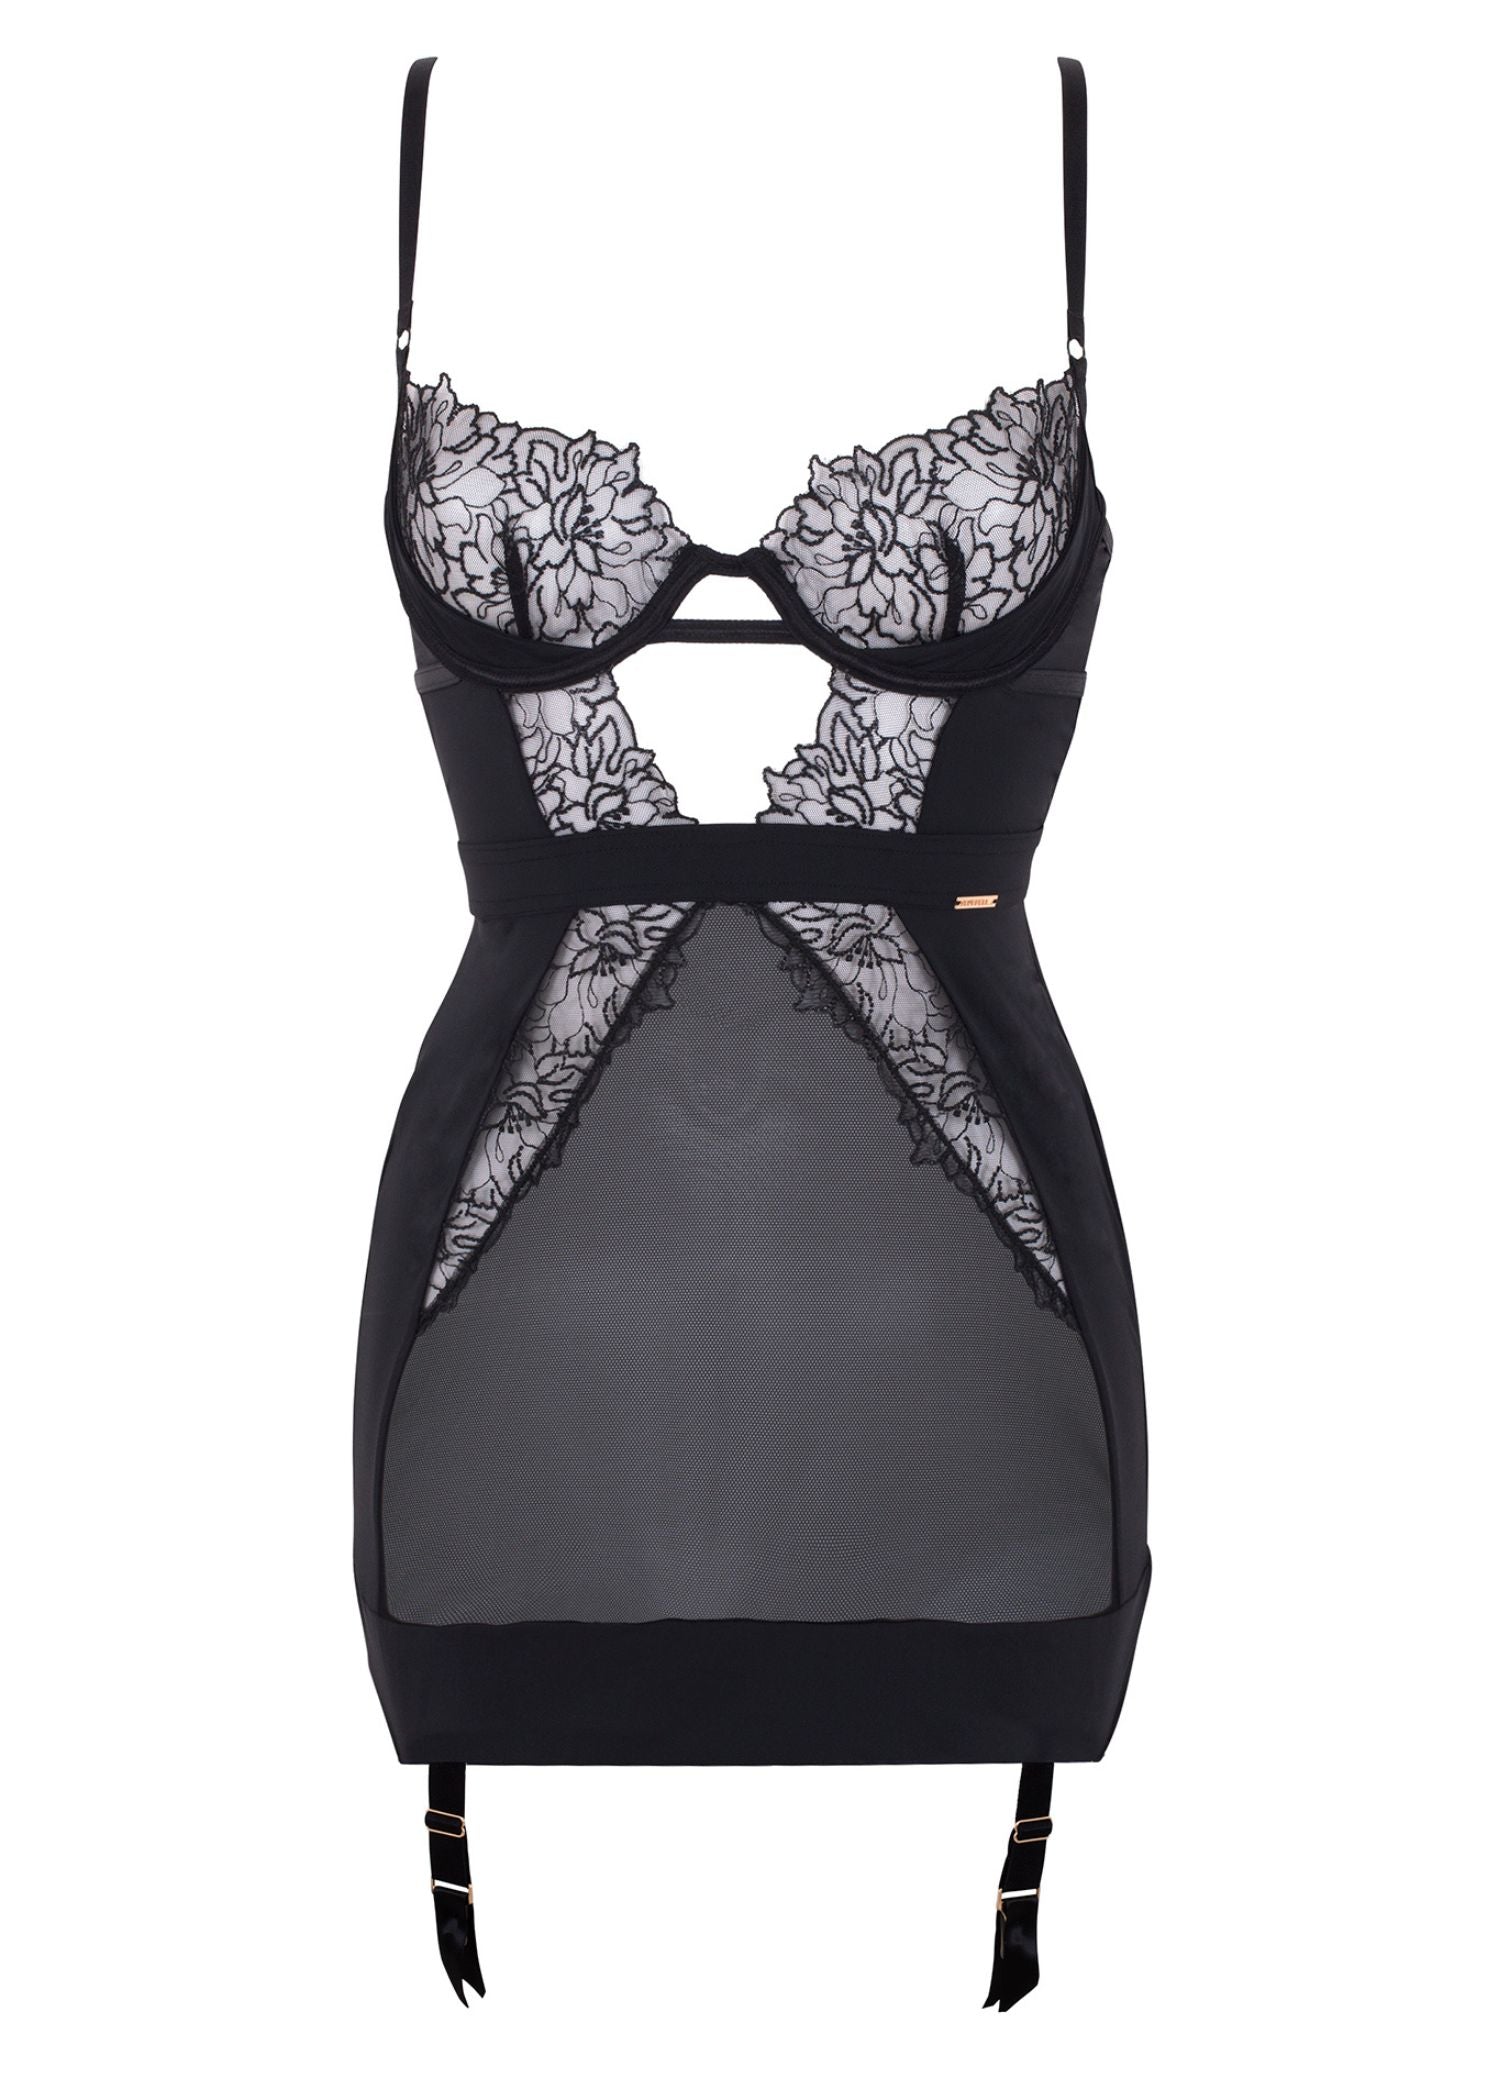 32B Size Bra - Buy 32B Black Padded Lace Bra Online